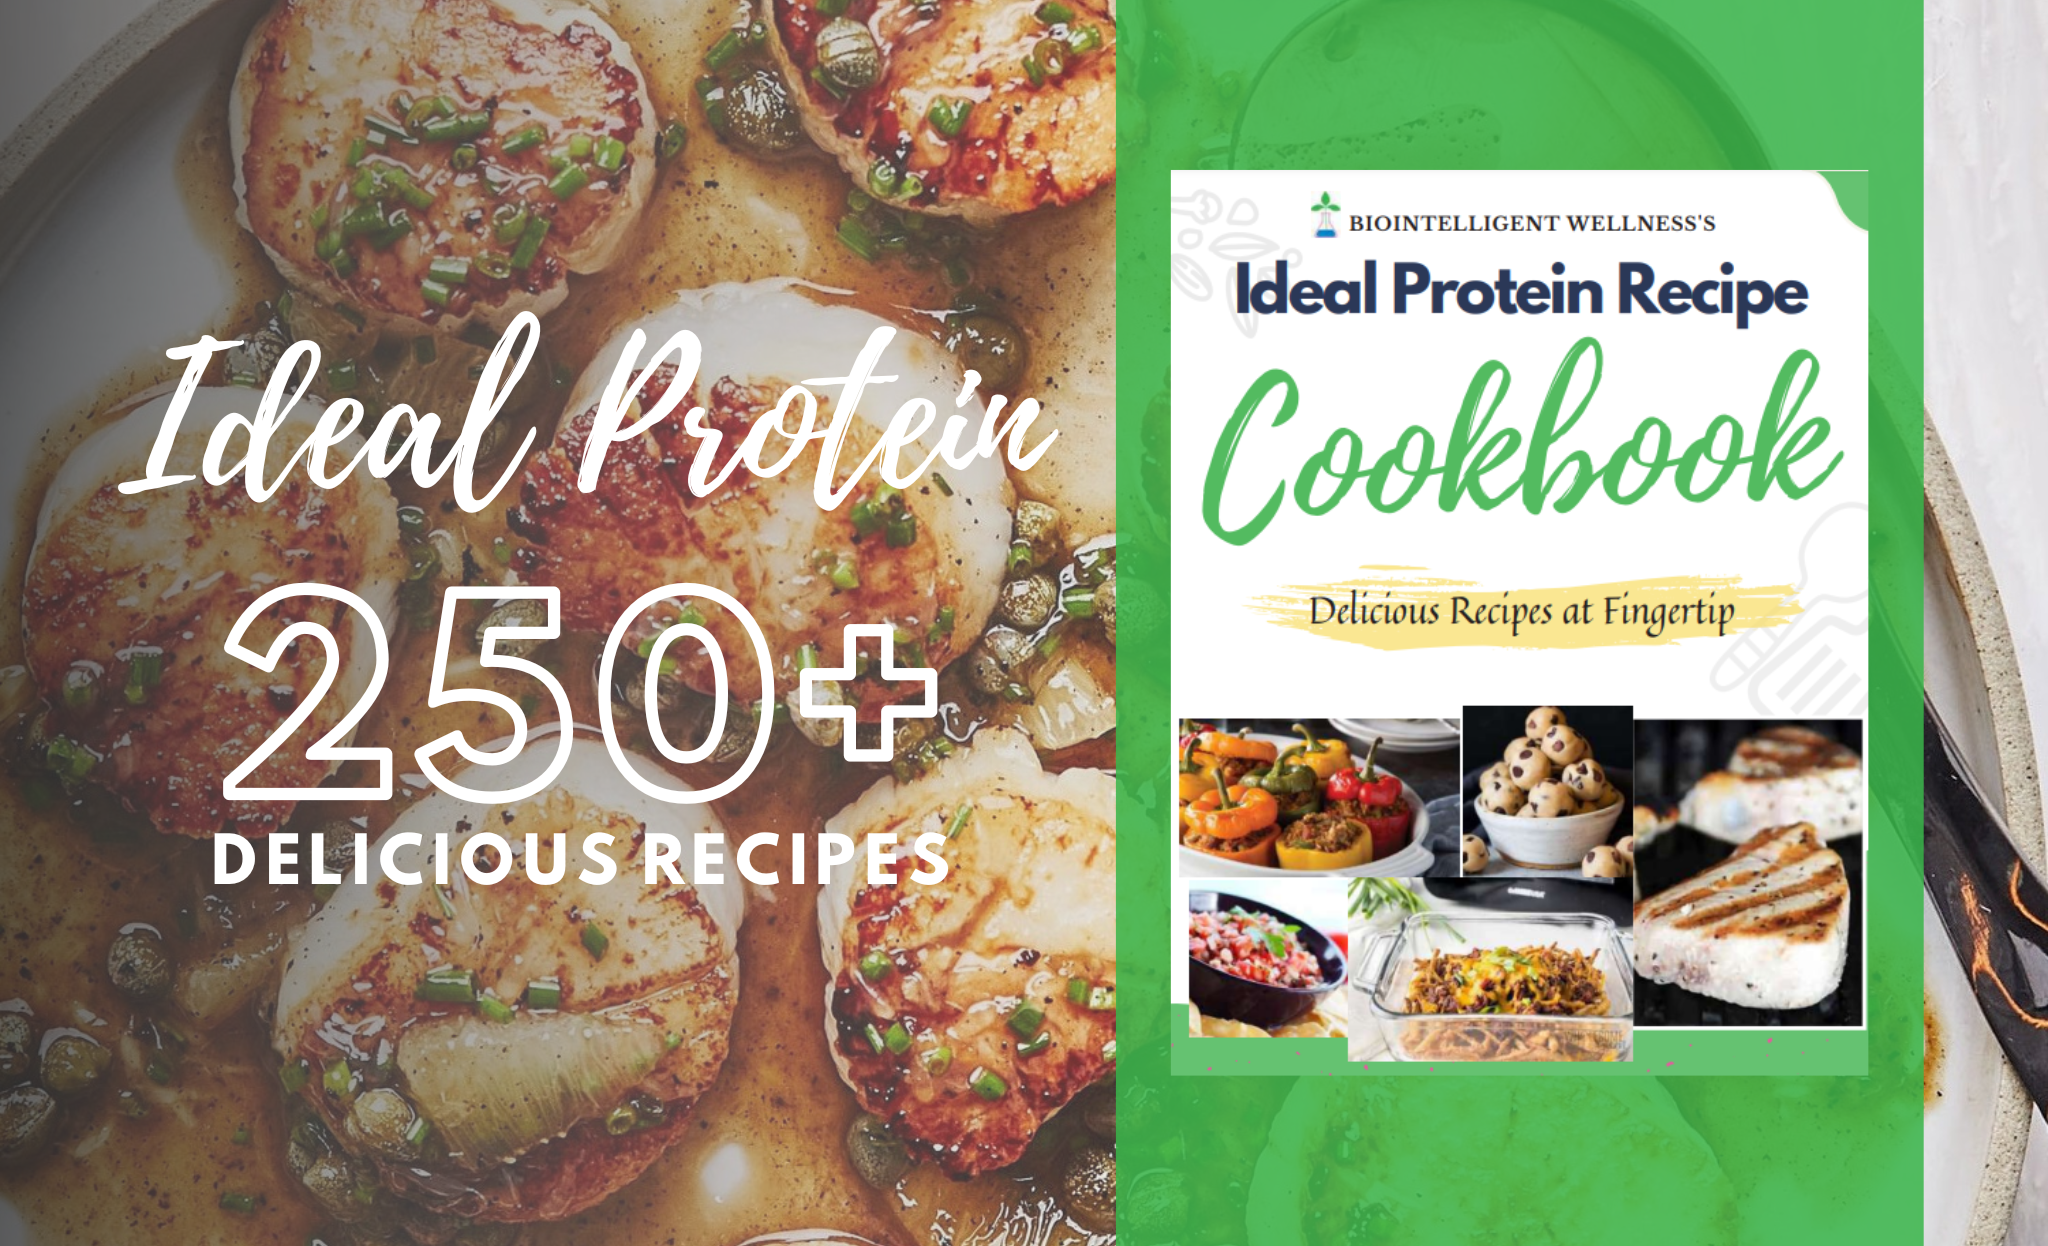 BioIntelligent Wellness' Ideal Protein Recipe Cookbook